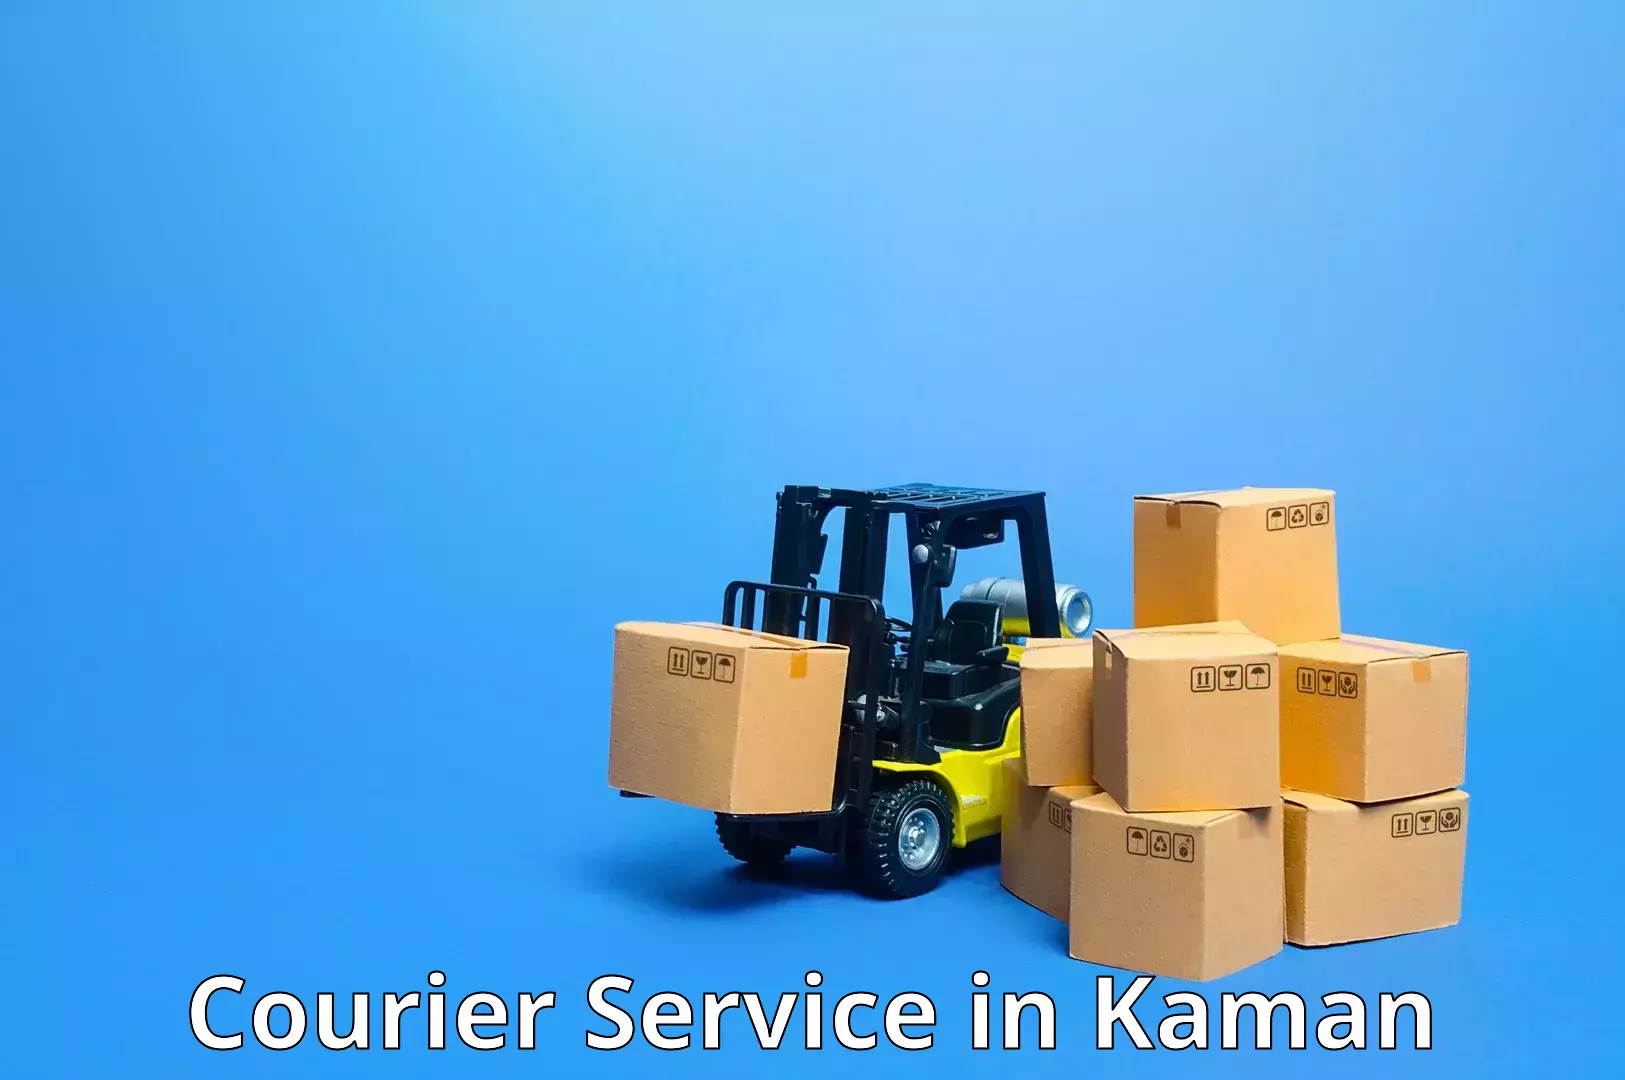 Efficient parcel transport in Kaman